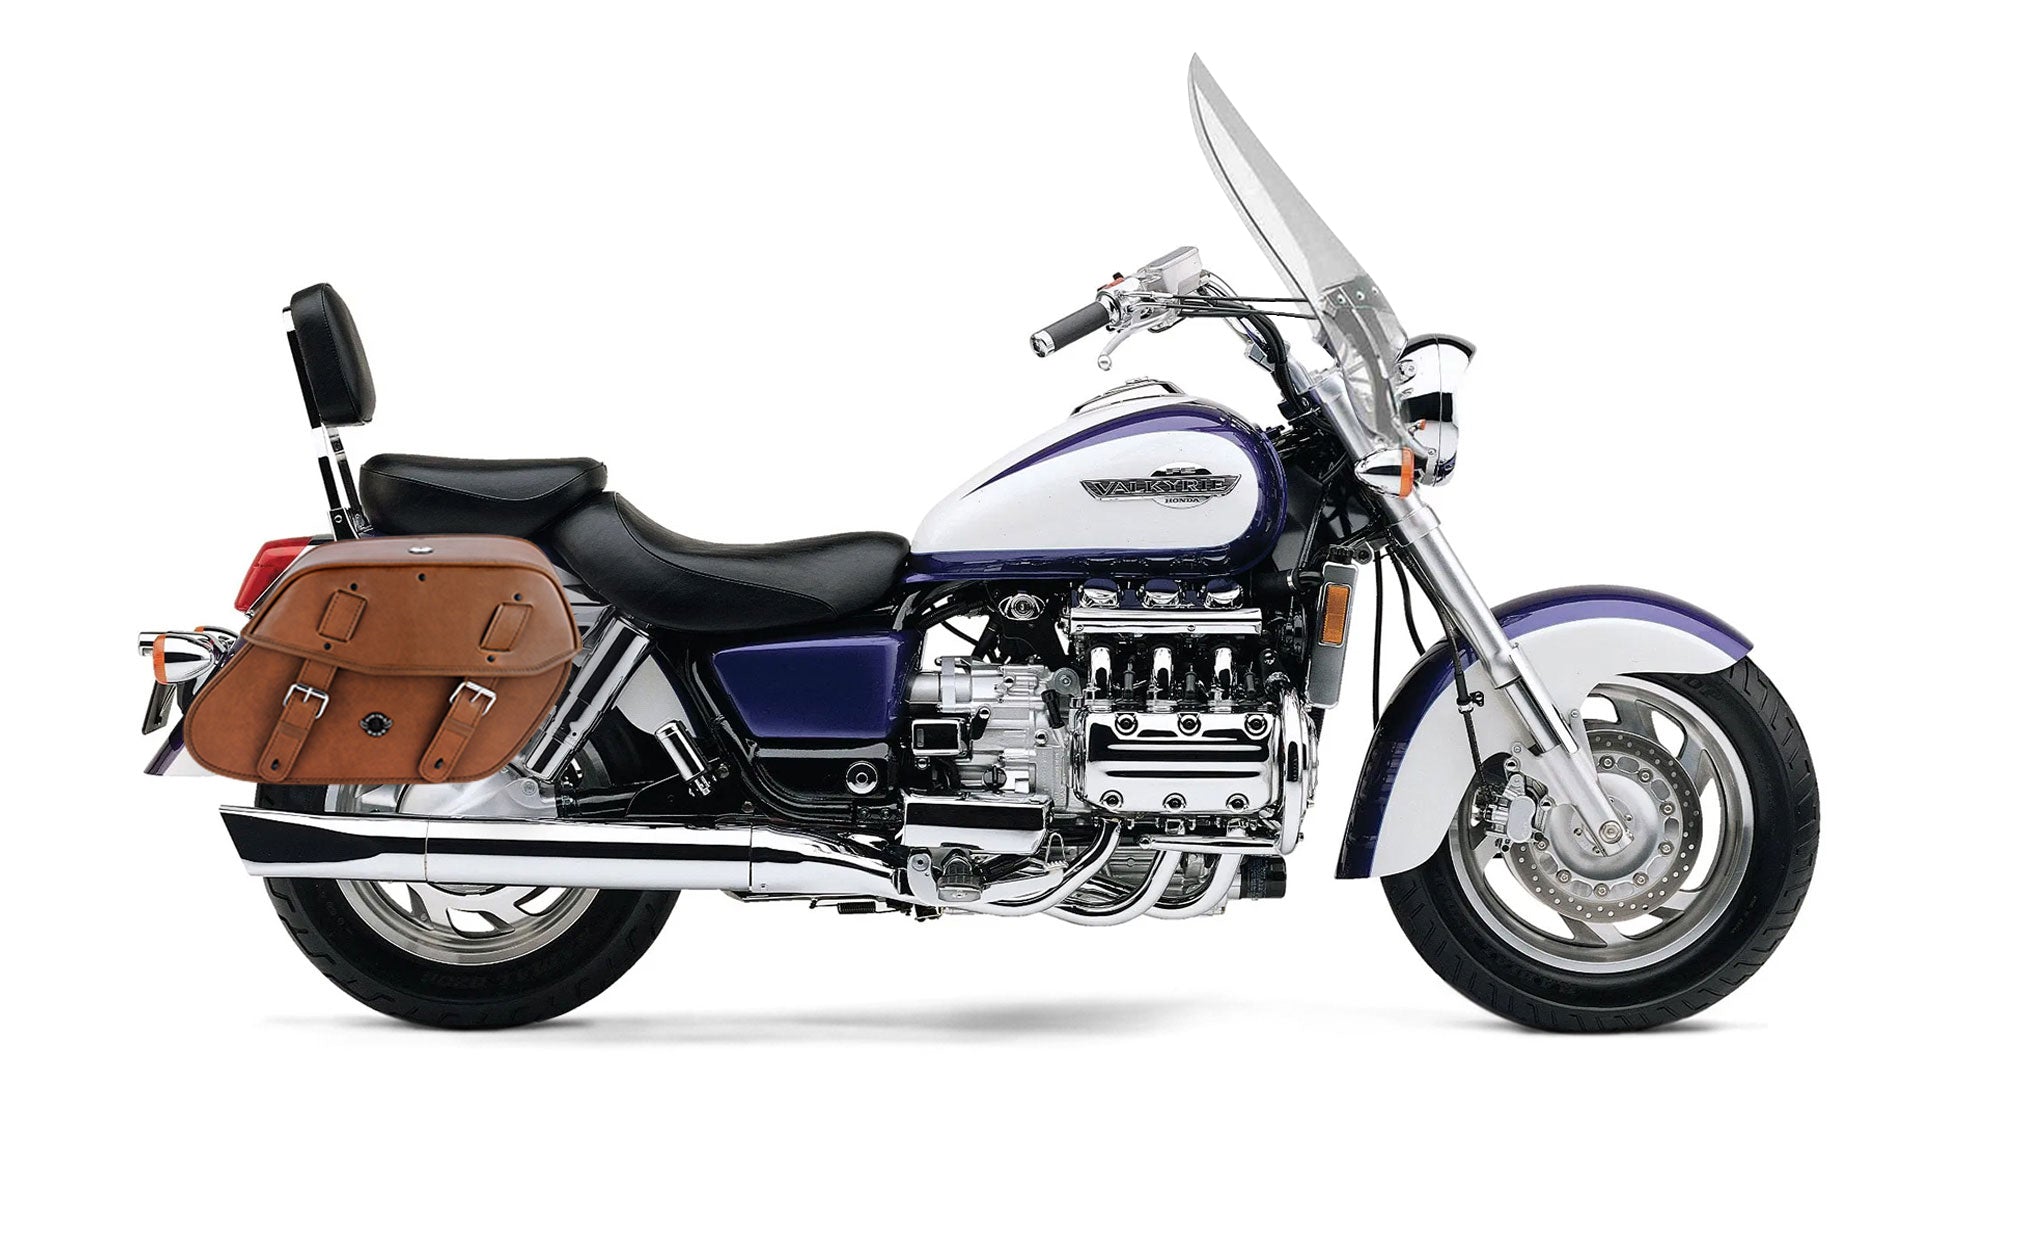 Viking Odin Brown Large Honda Valkyrie 1500 Tourer Leather Motorcycle Saddlebags on Bike Photo @expand